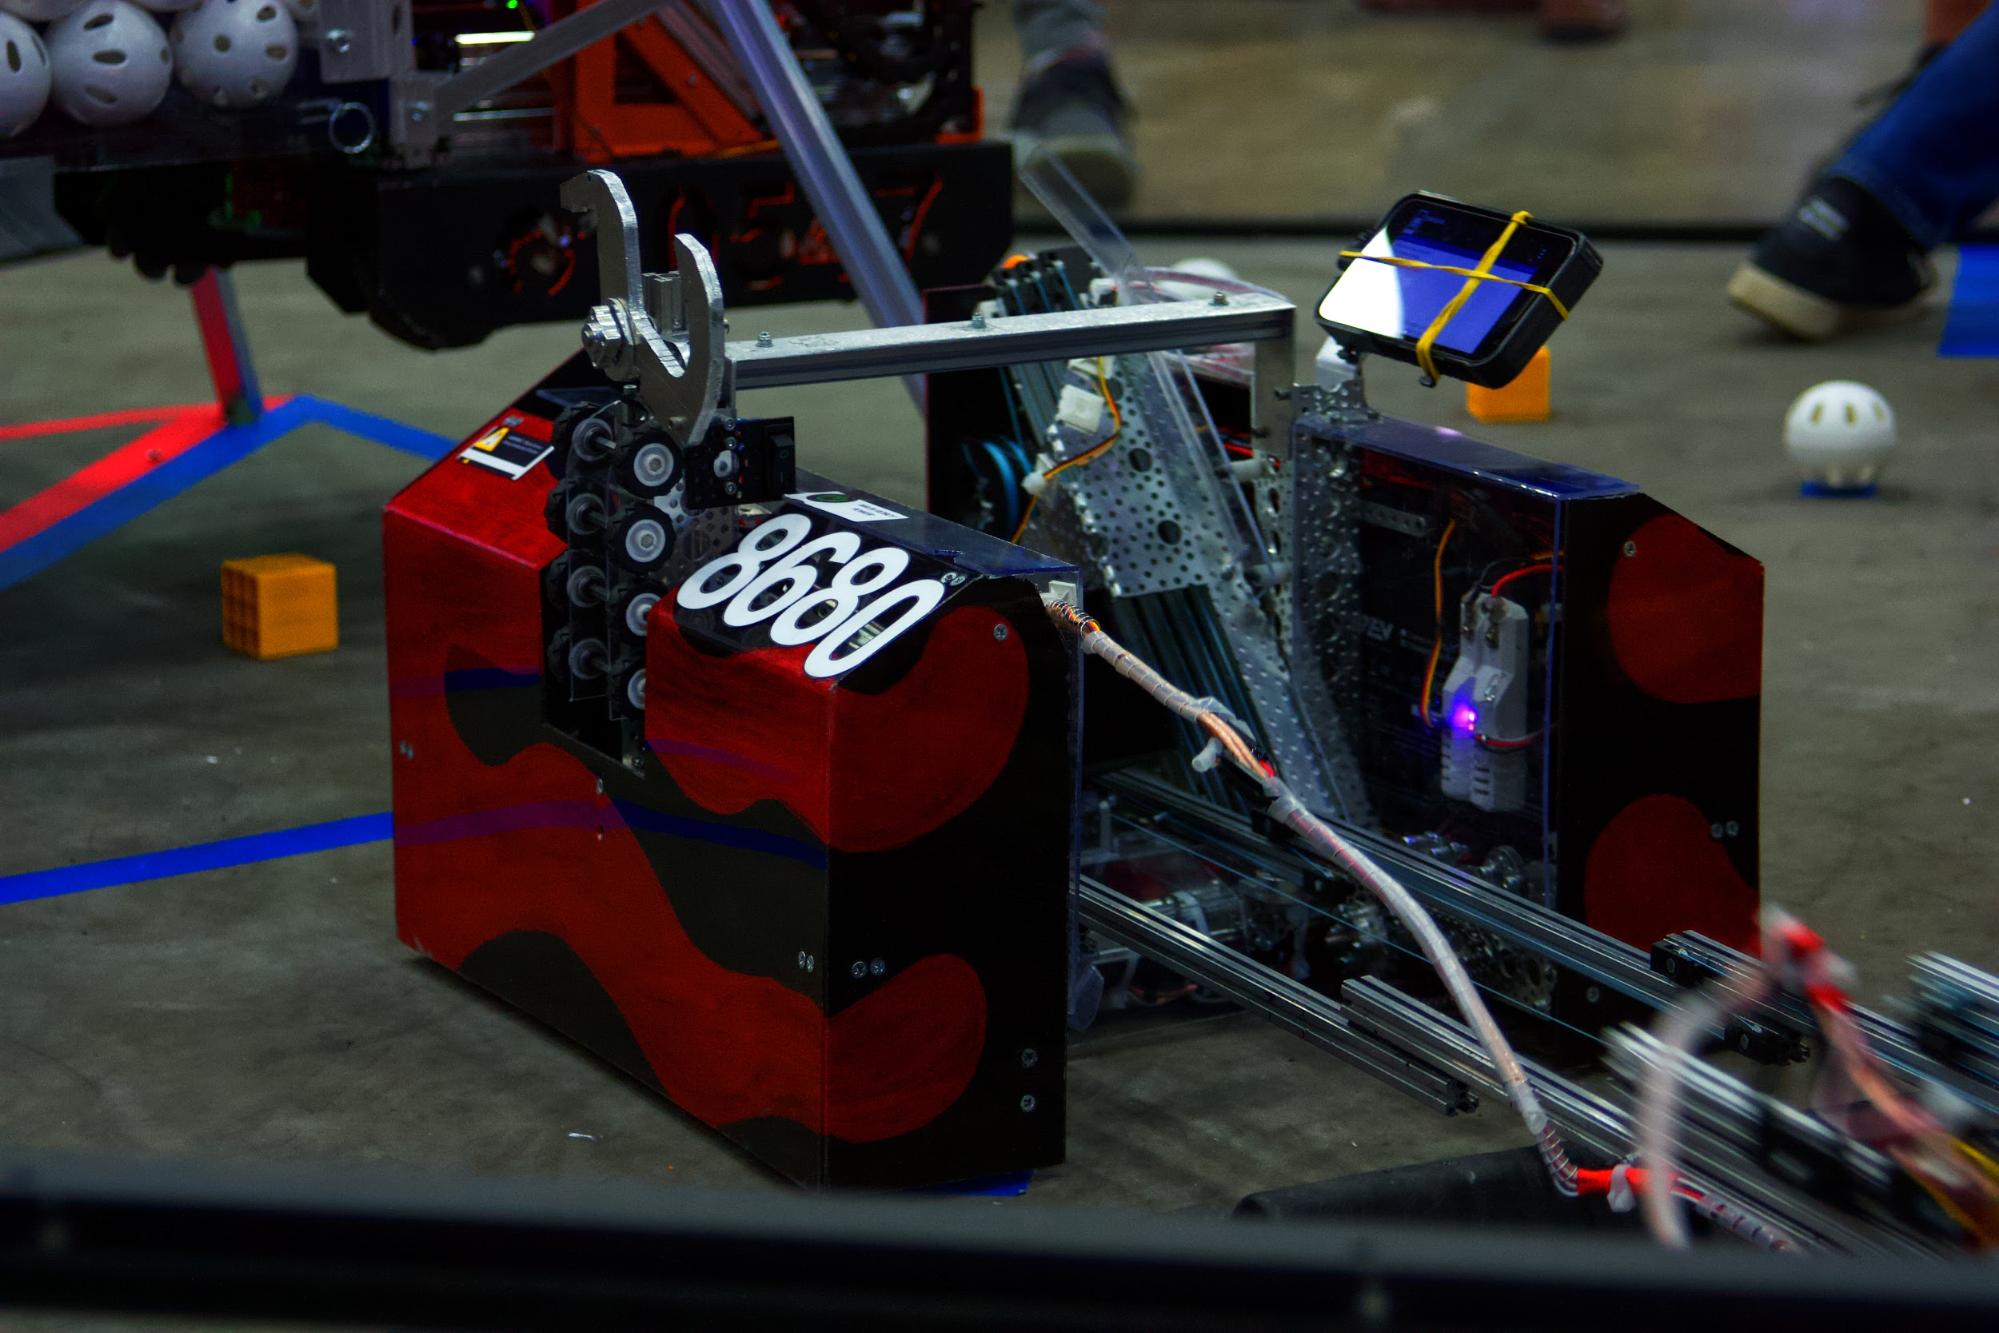 8680 Kraken-Pinion's Rover Ruckus robot with slides extended